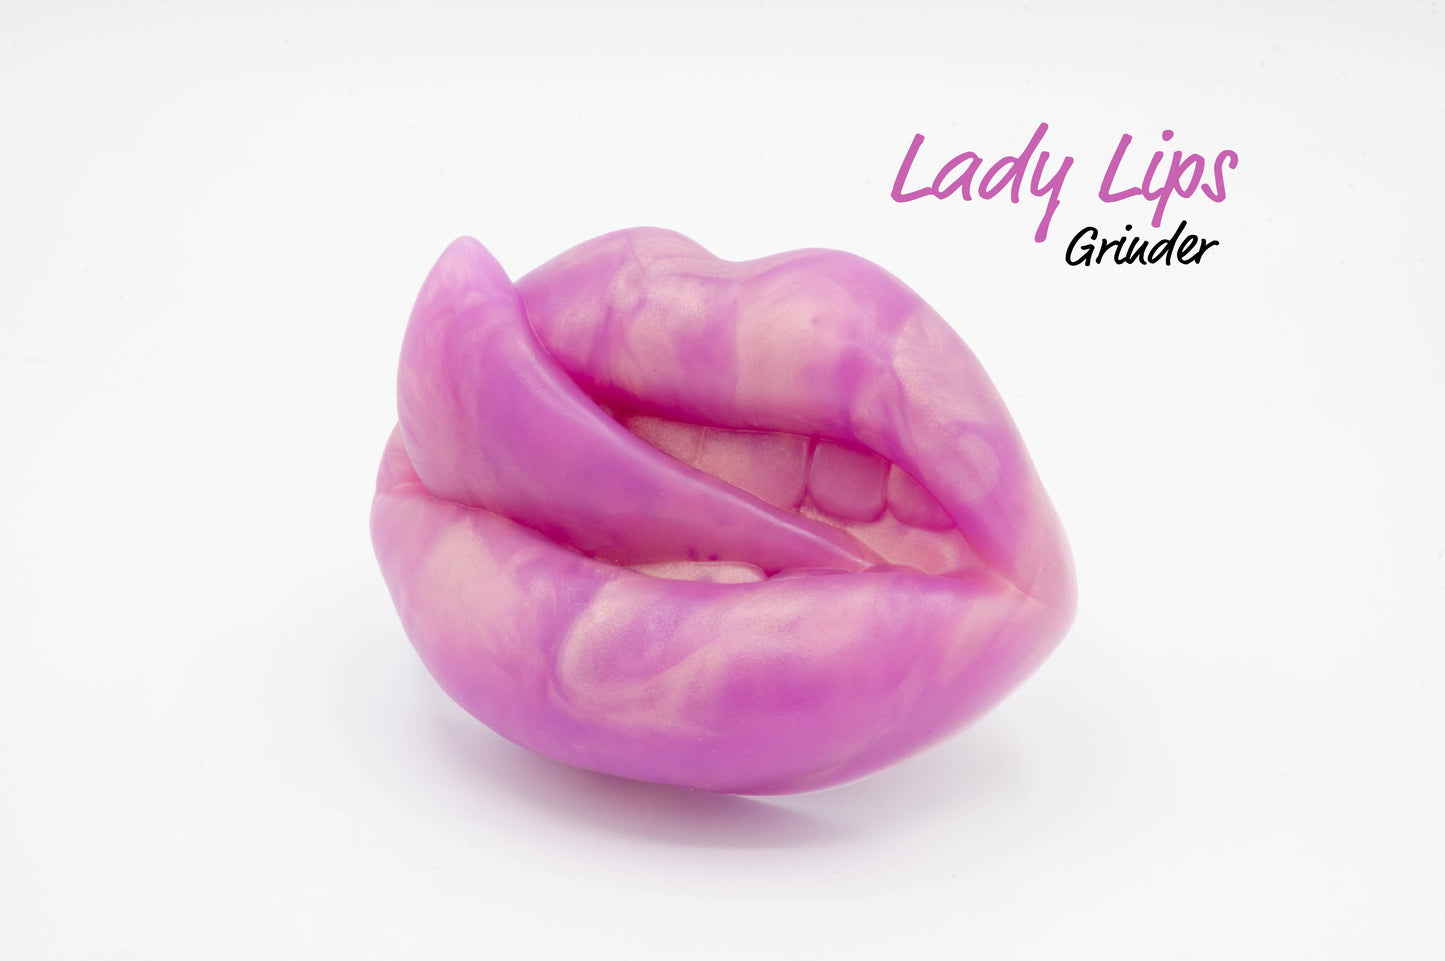 Lady Lips Grinder